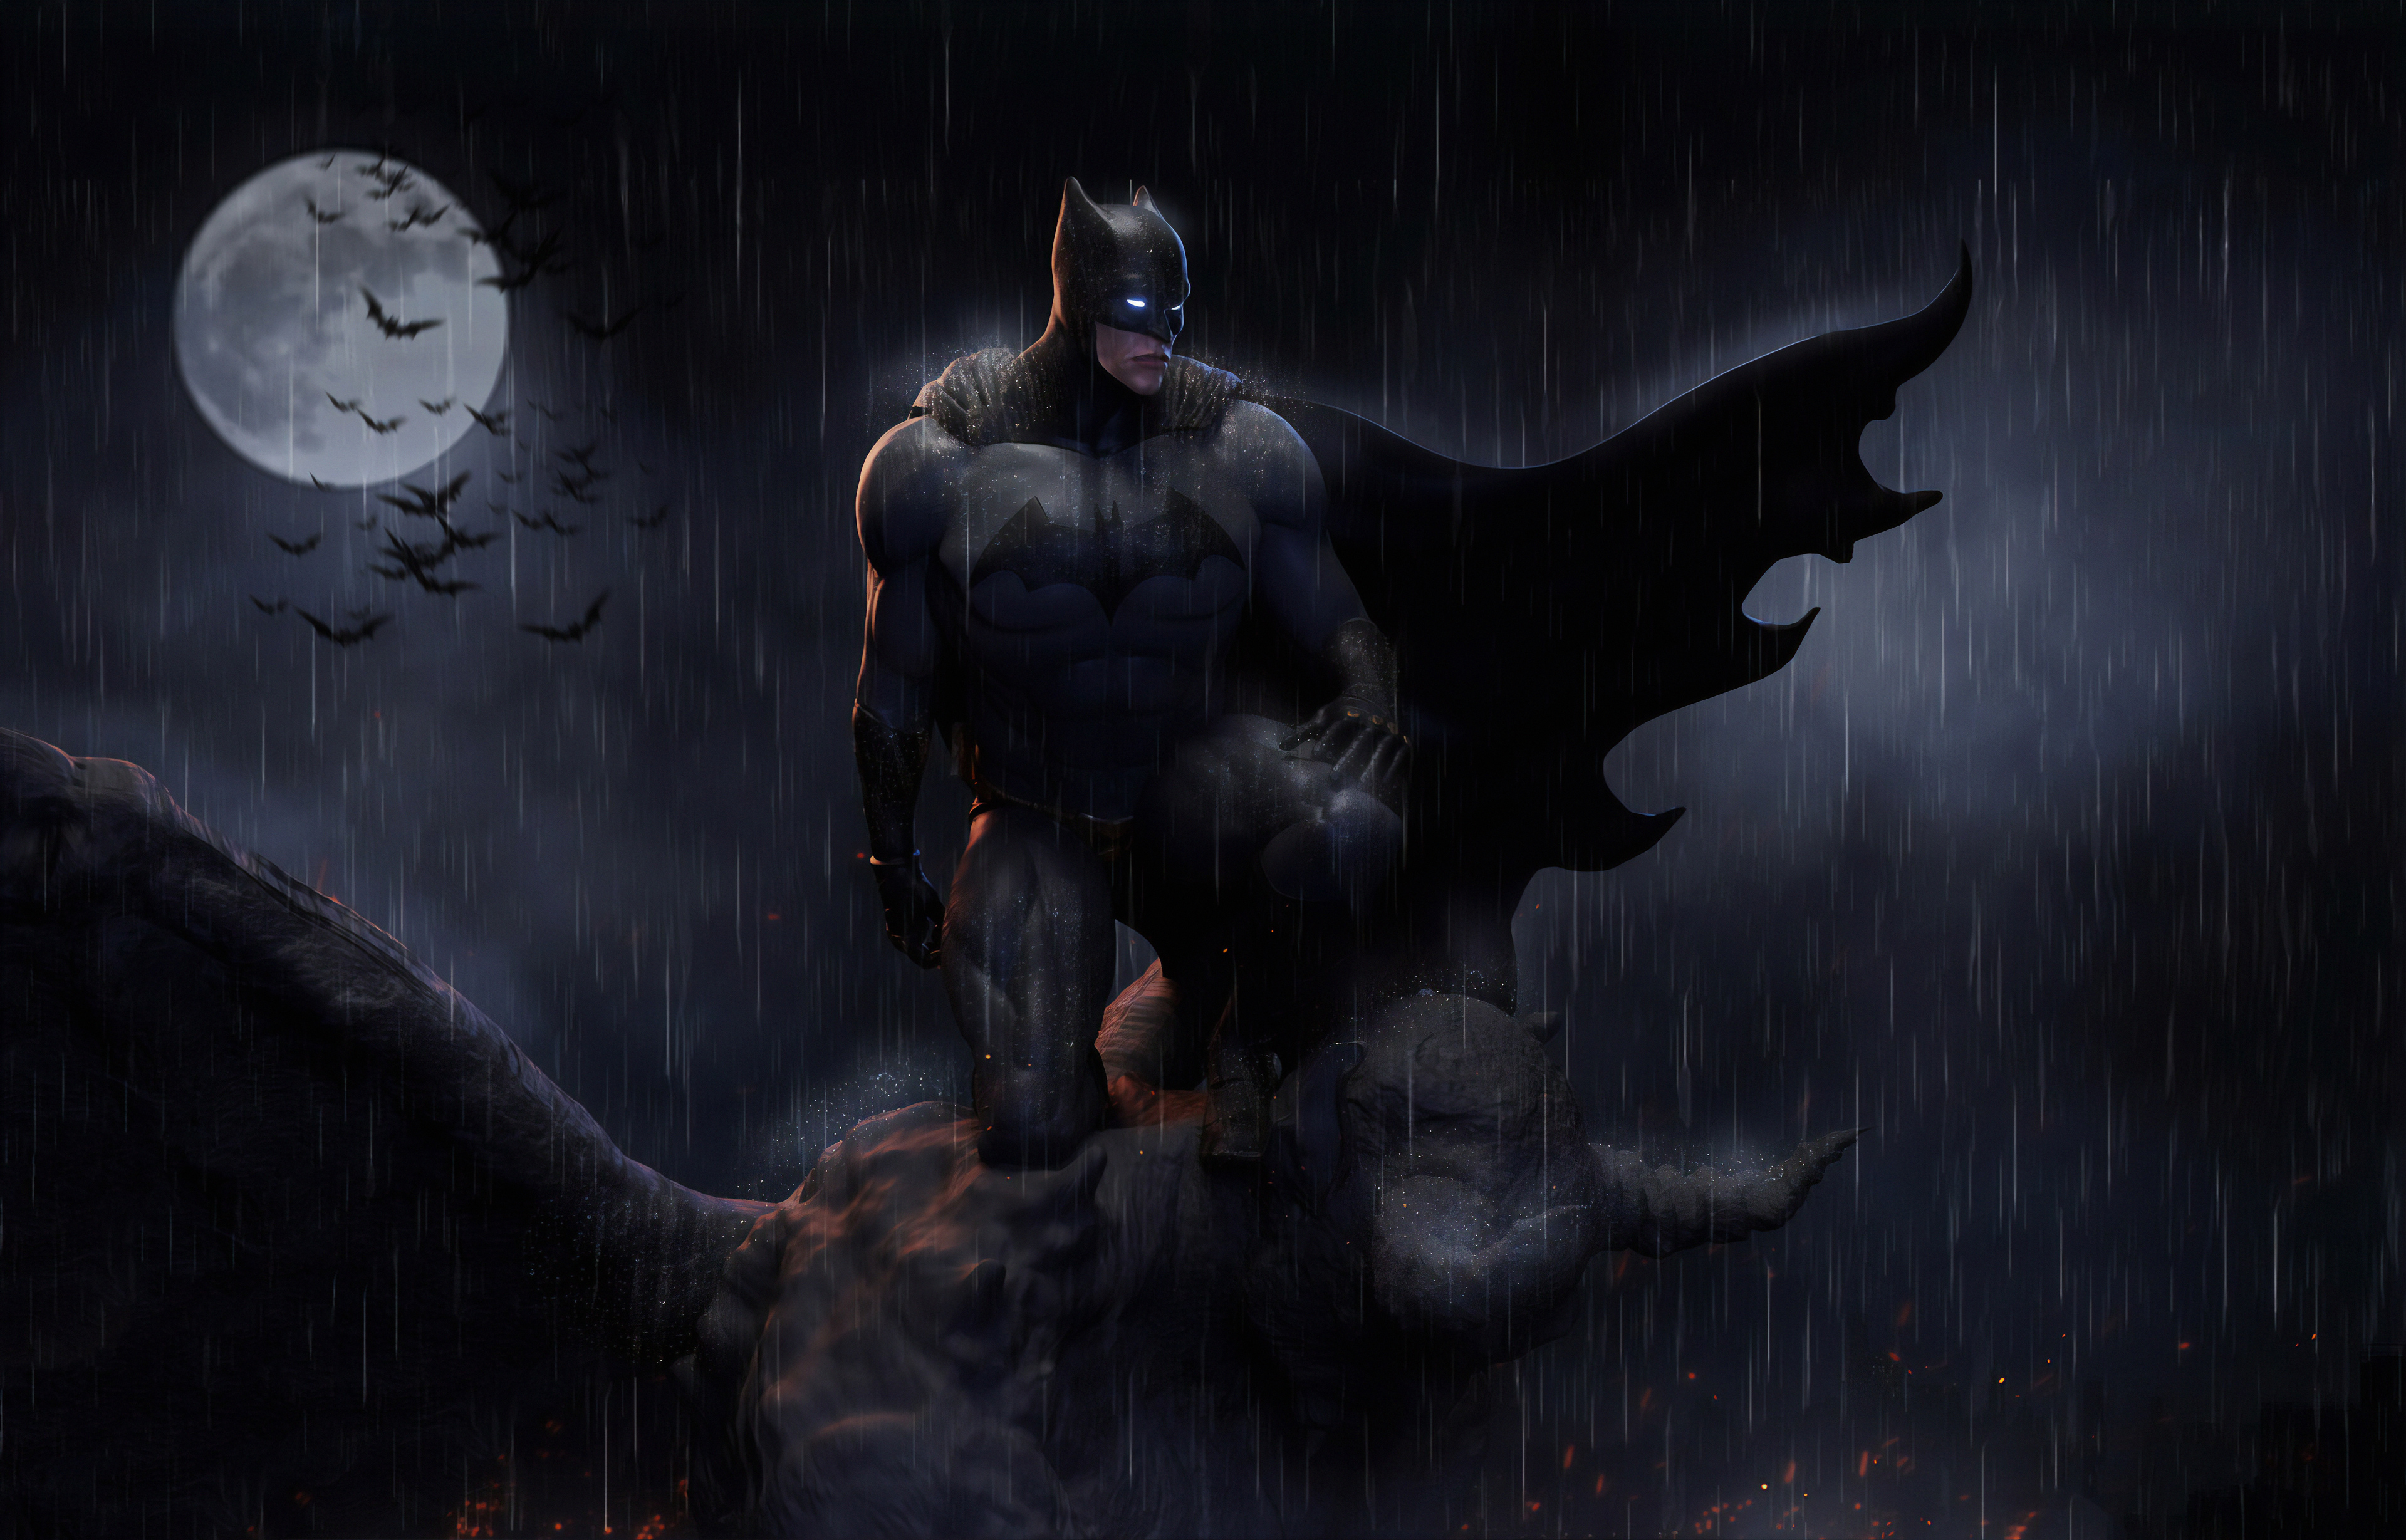 Batman 4k New Night, HD Superheroes, 4k Wallpapers, Images, Backgrounds